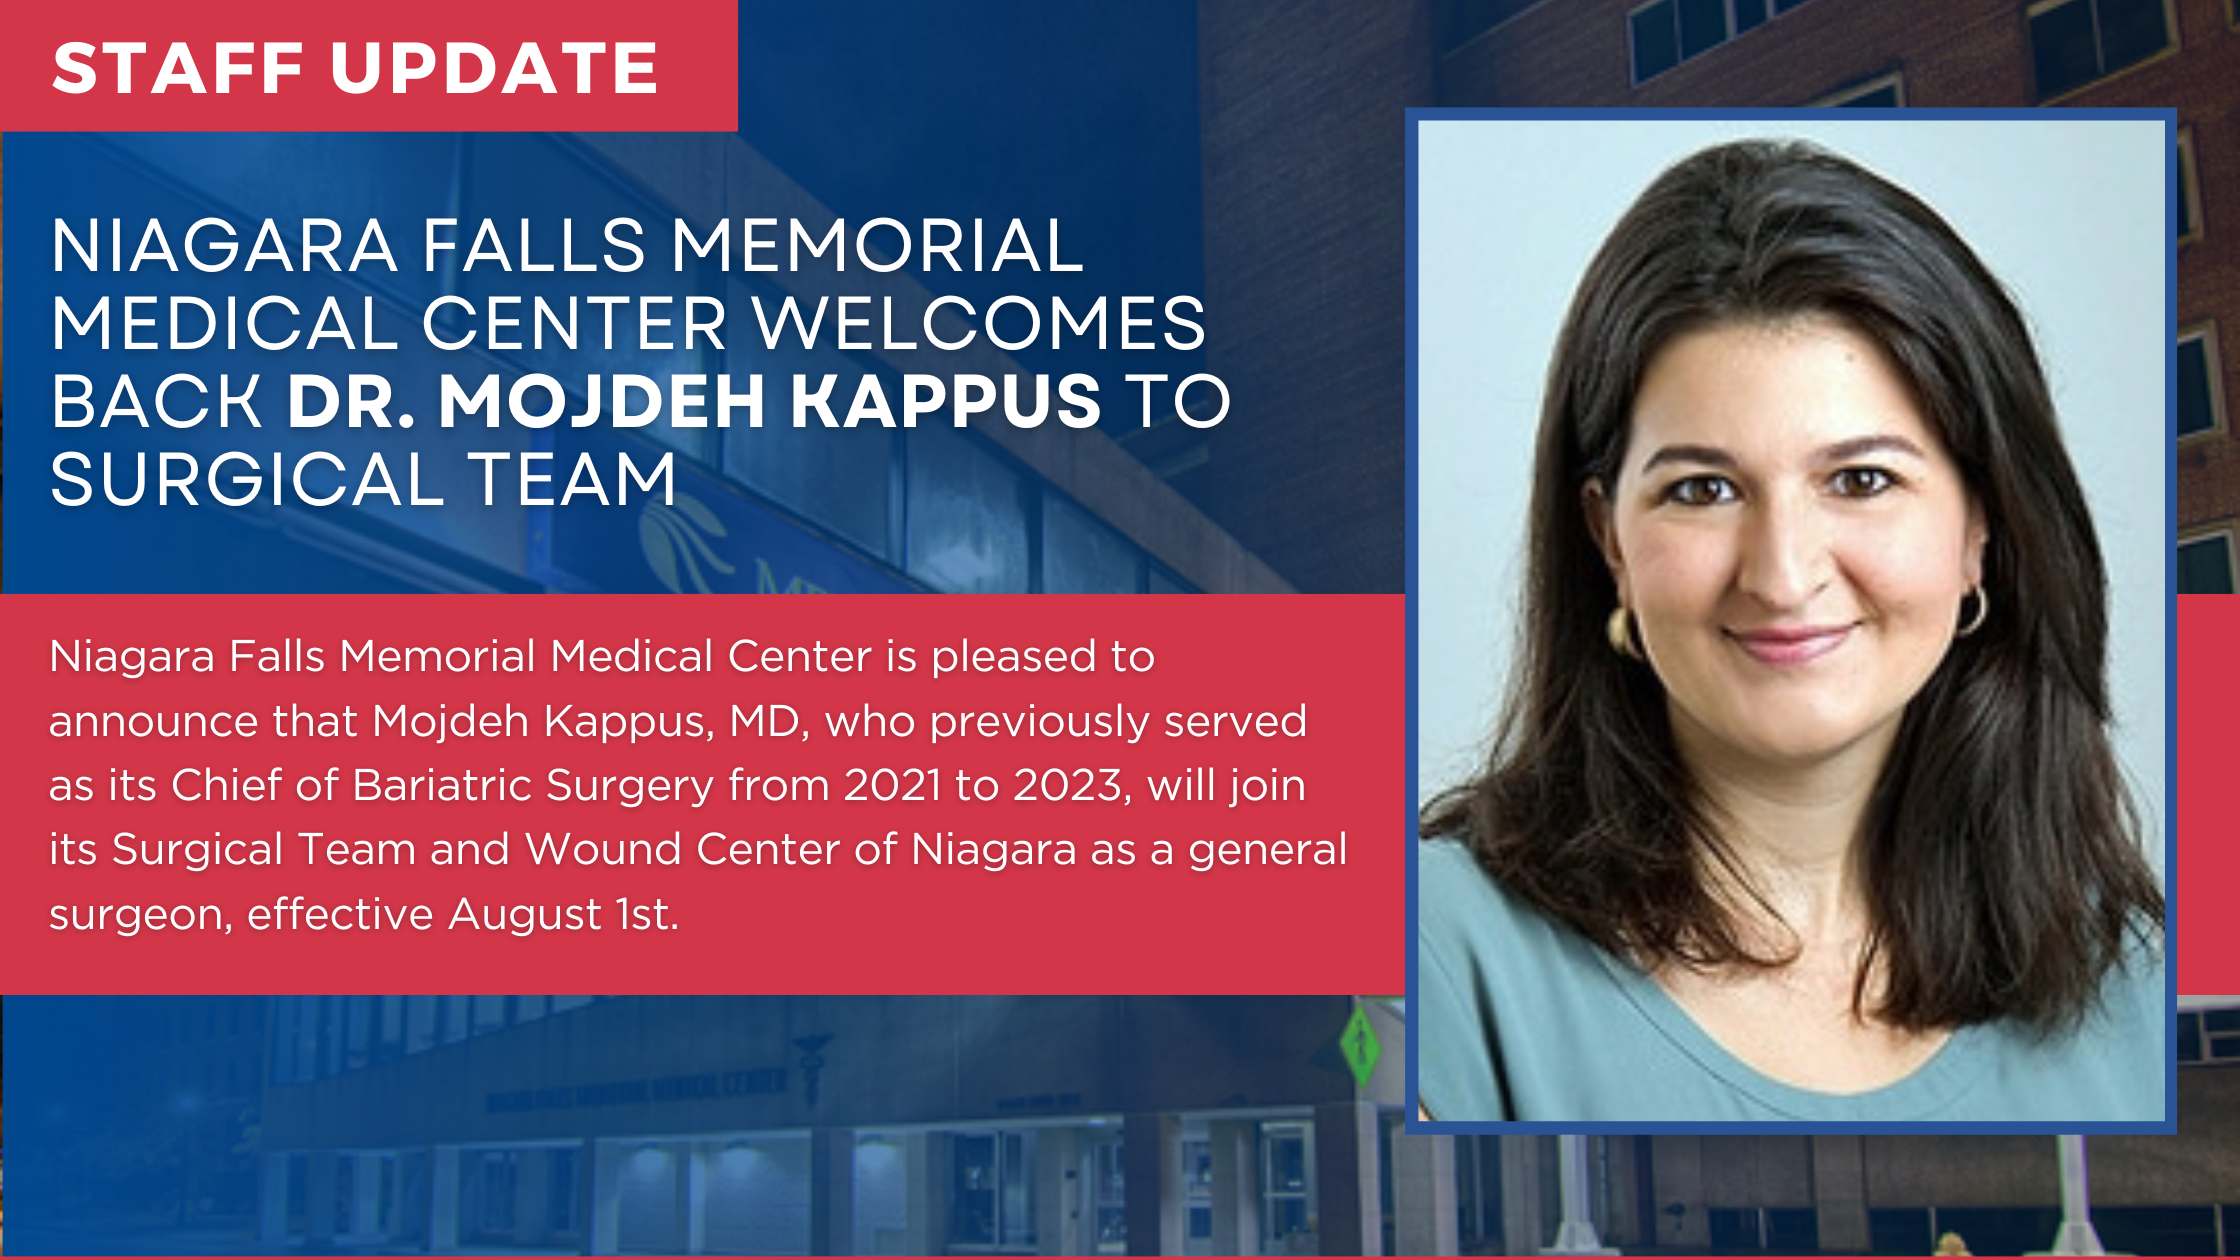 Niagara Falls Memorial Medical Center Welcomes Back Dr. Mojdeh Kappus to Surgical Team